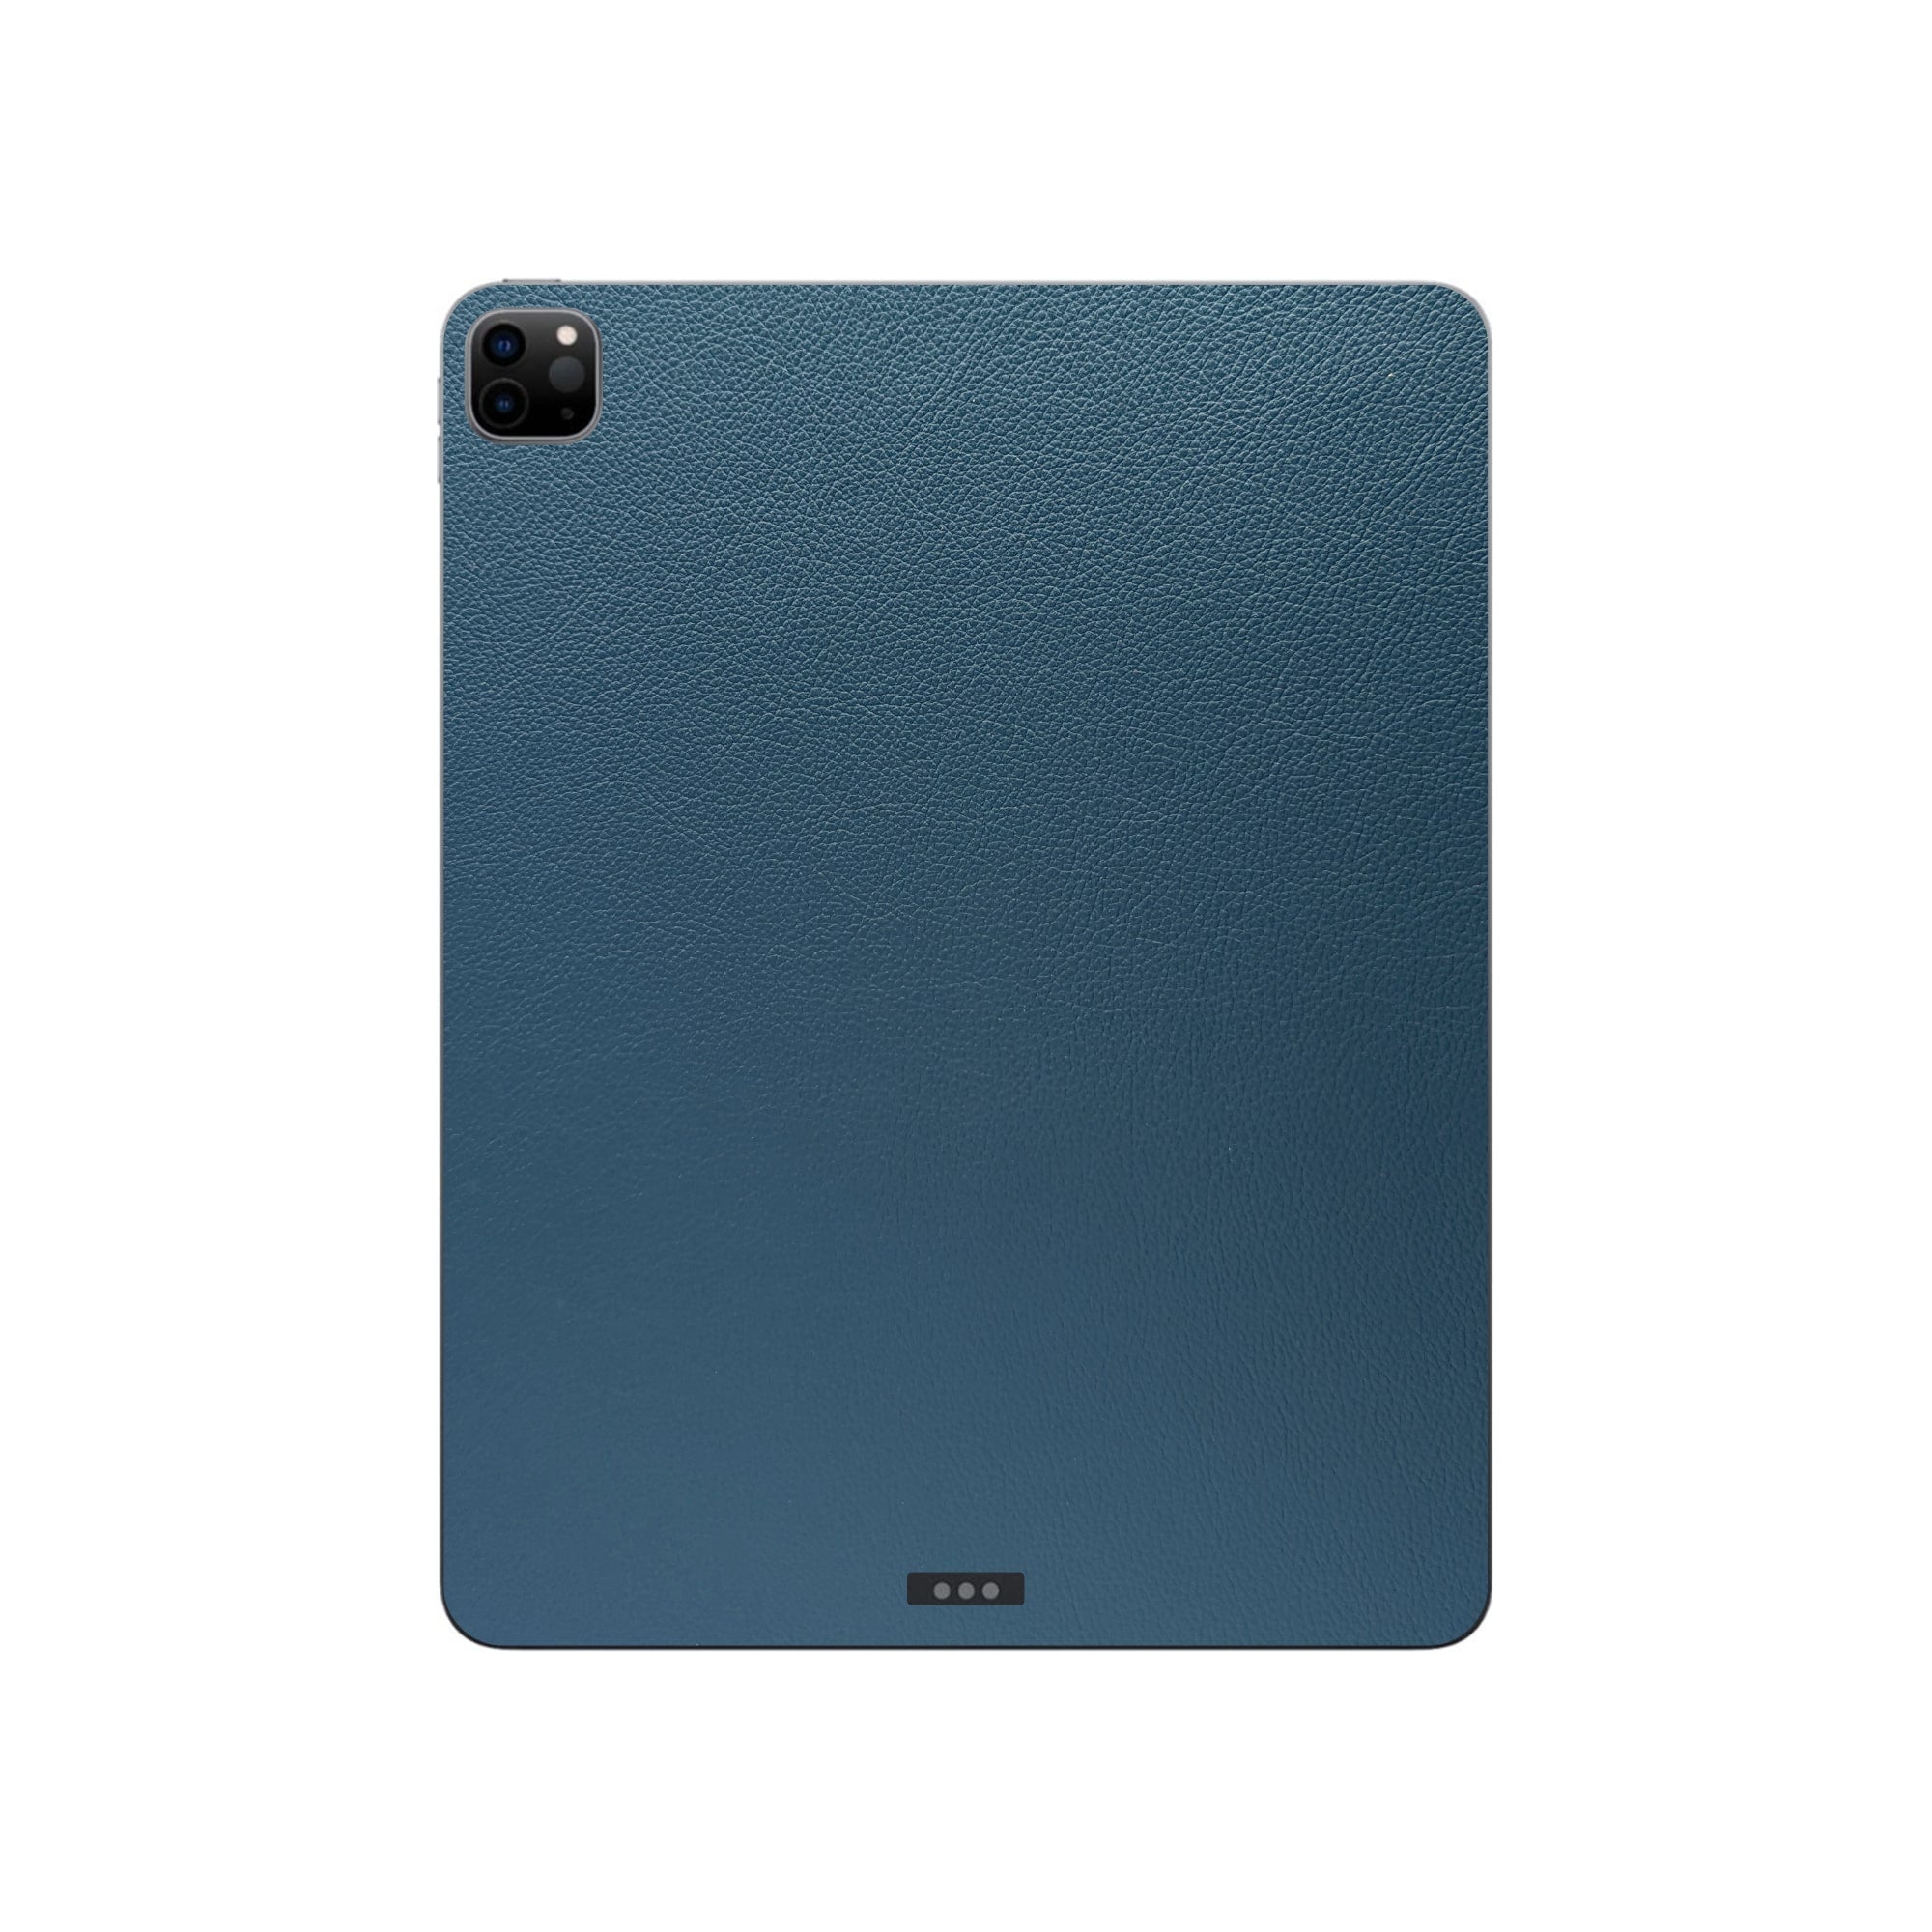 alt: iPad Leather Skin | var:cobalt-blue